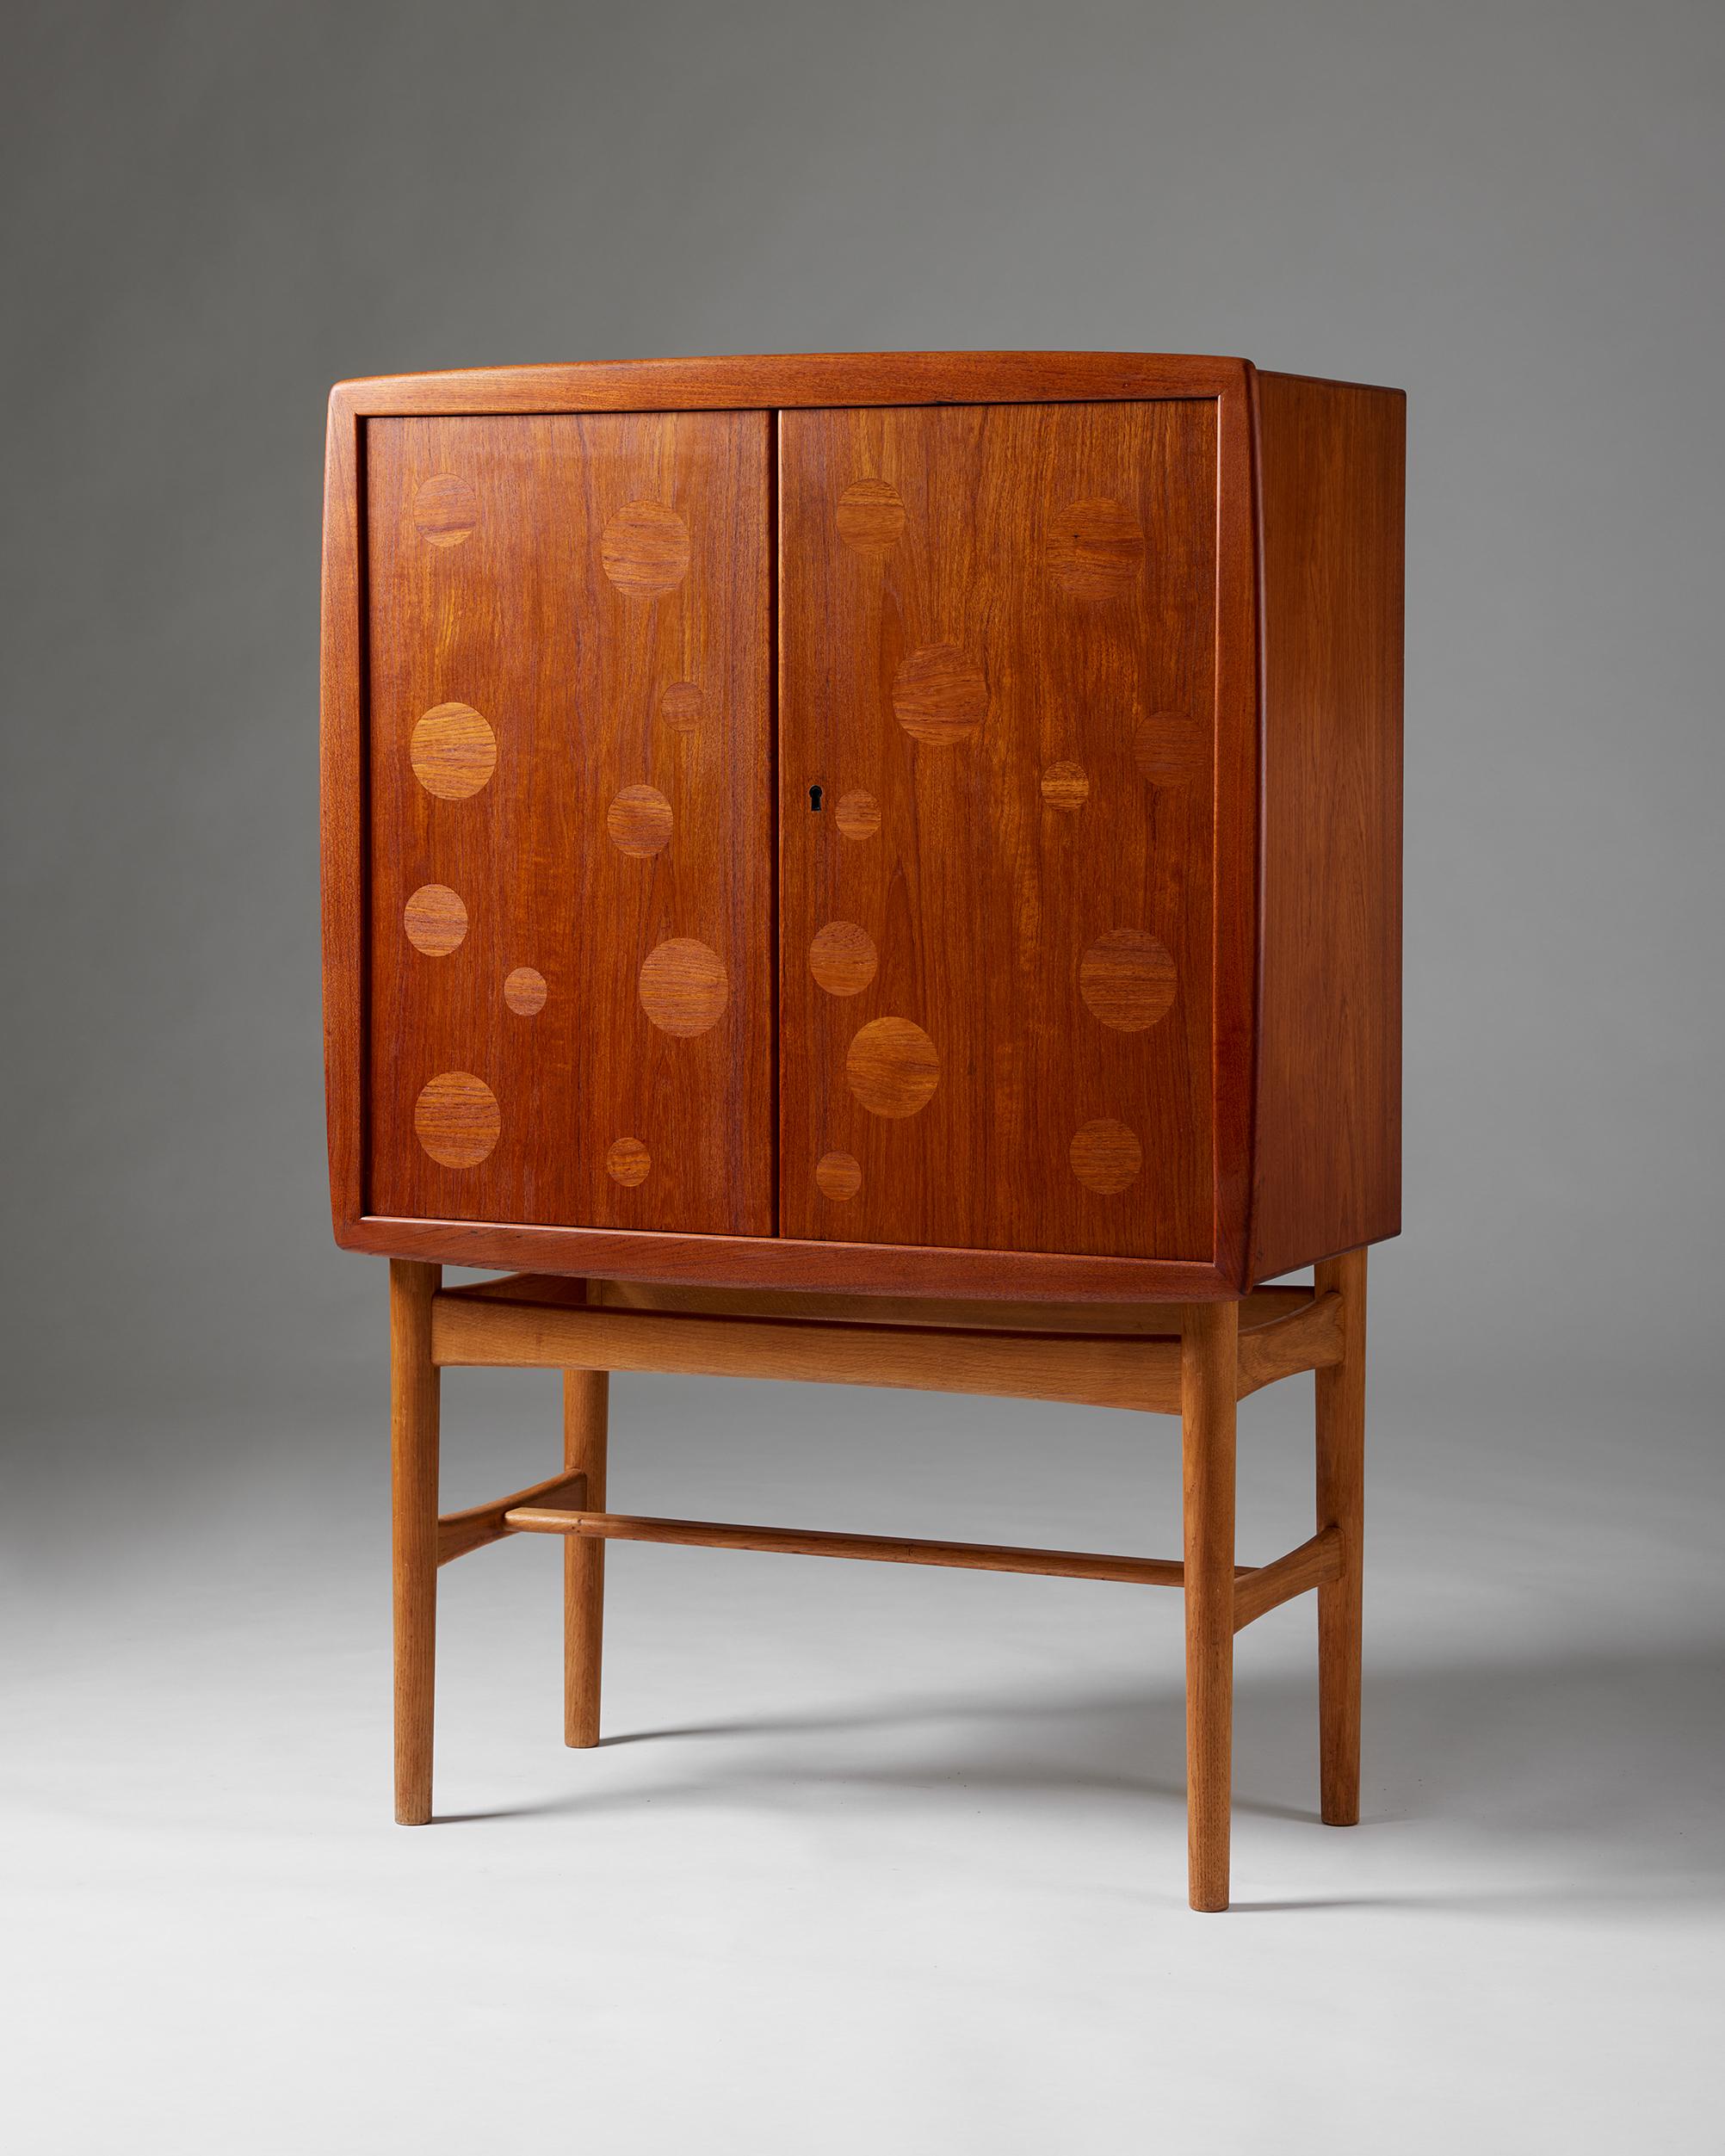 Bar cabinet designed by Kurt Östervig for KP Möbler,
Denmark, 1950s

Teak, maple, and glass.